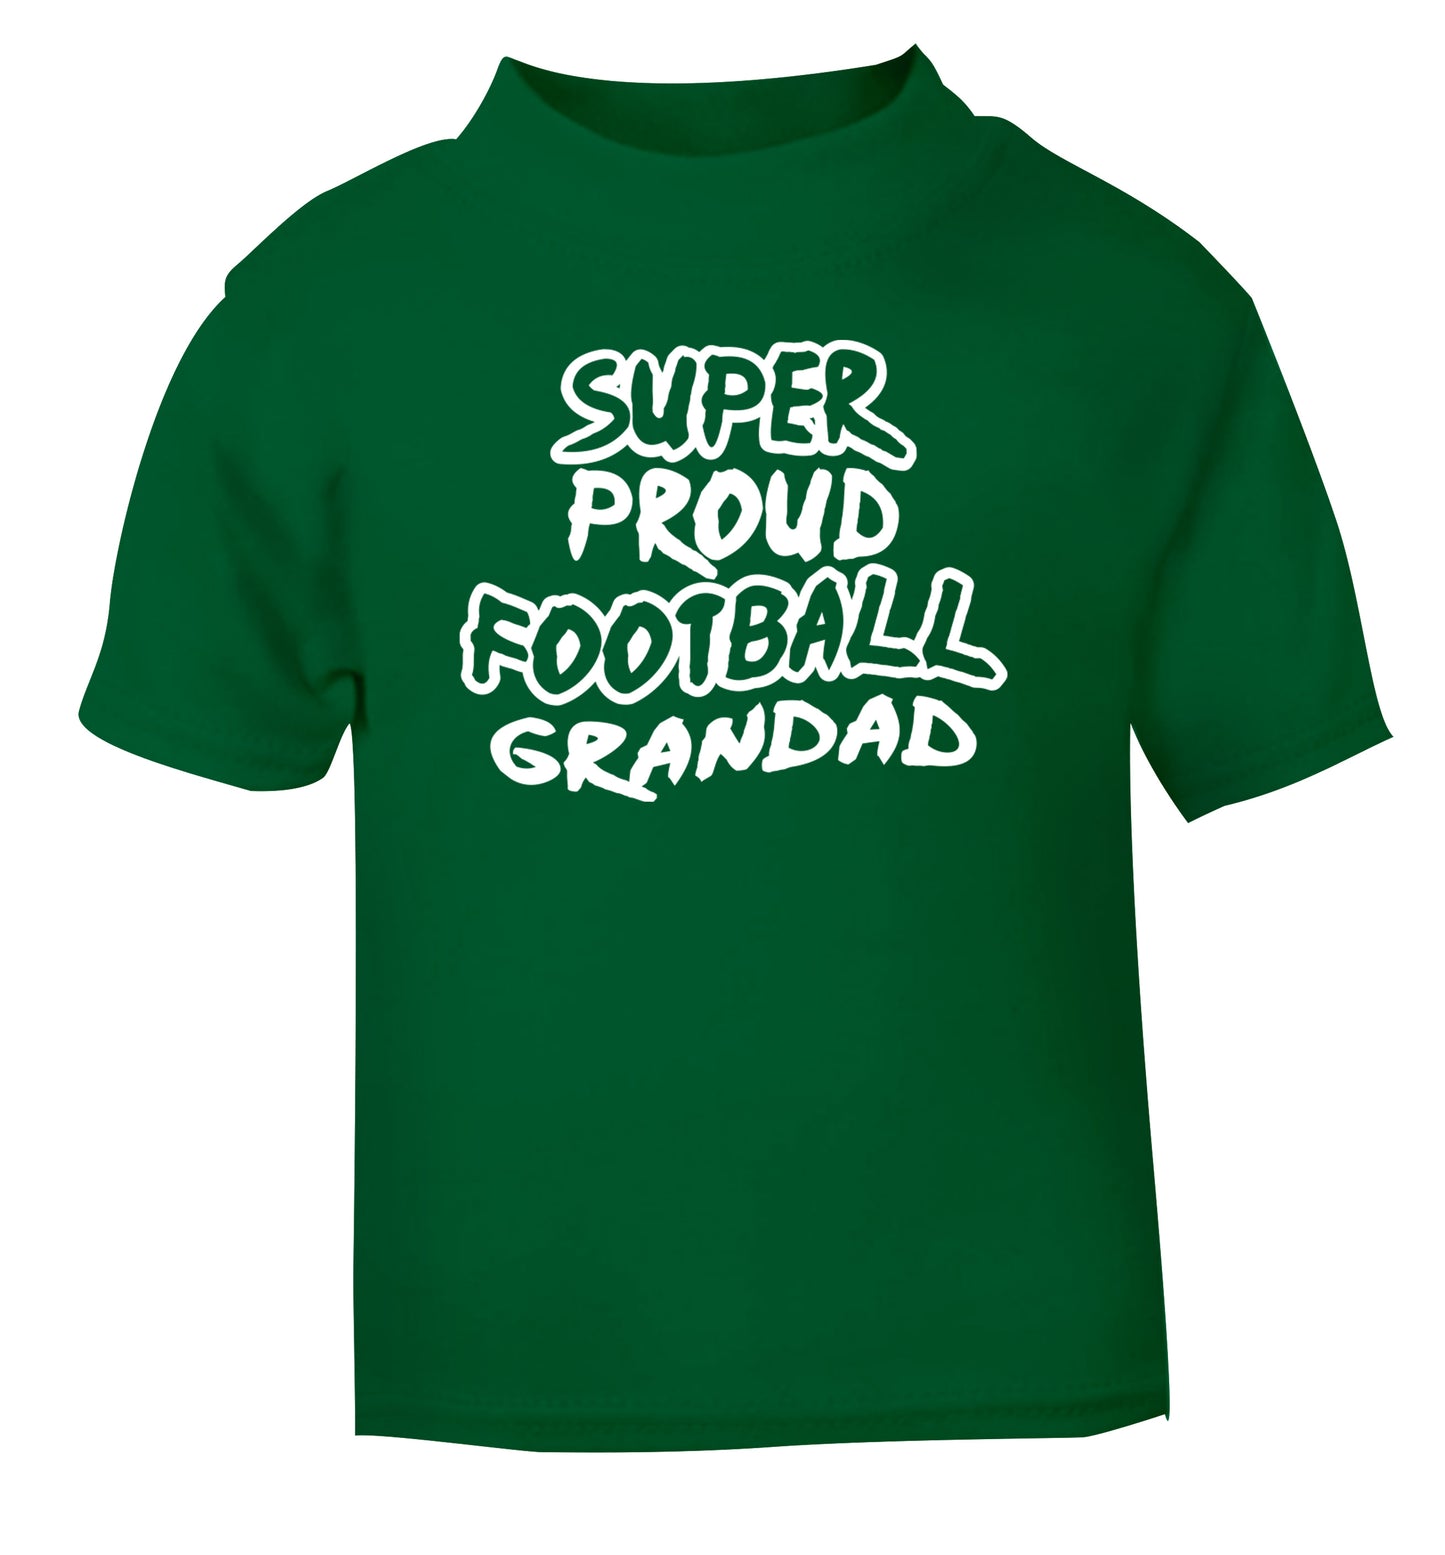 Super proud football grandad green Baby Toddler Tshirt 2 Years